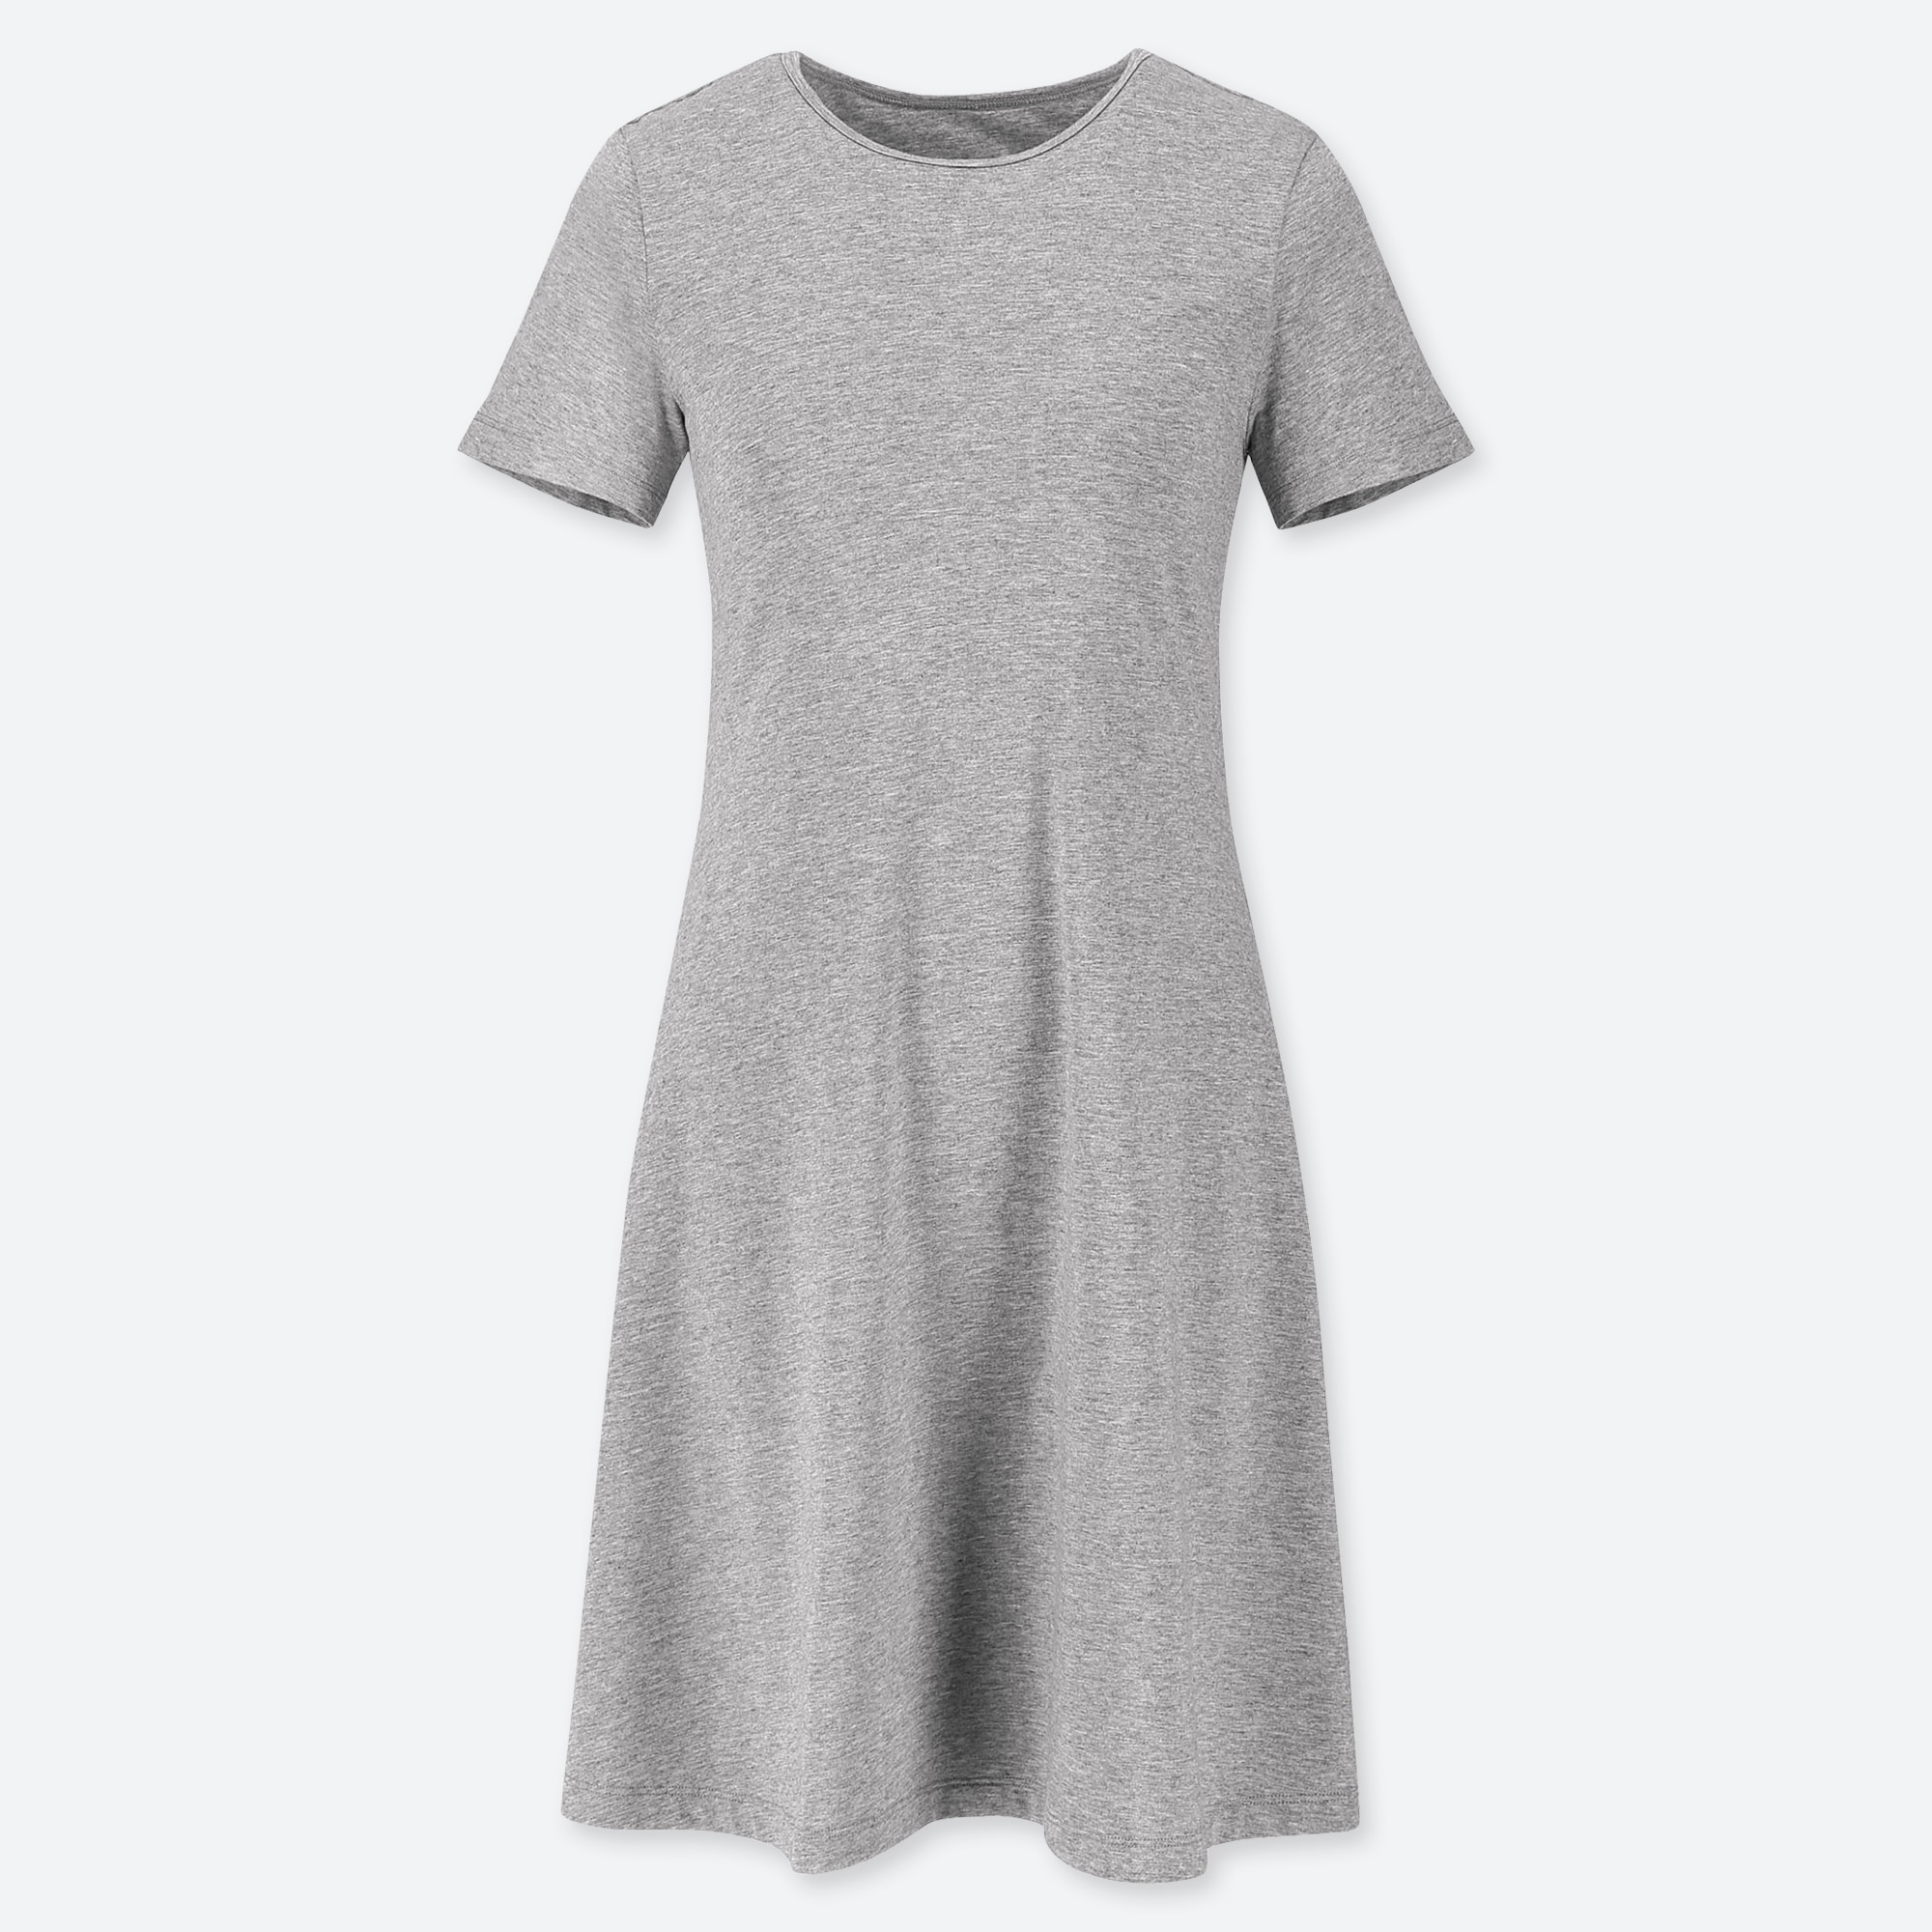 gray short sleeve dress